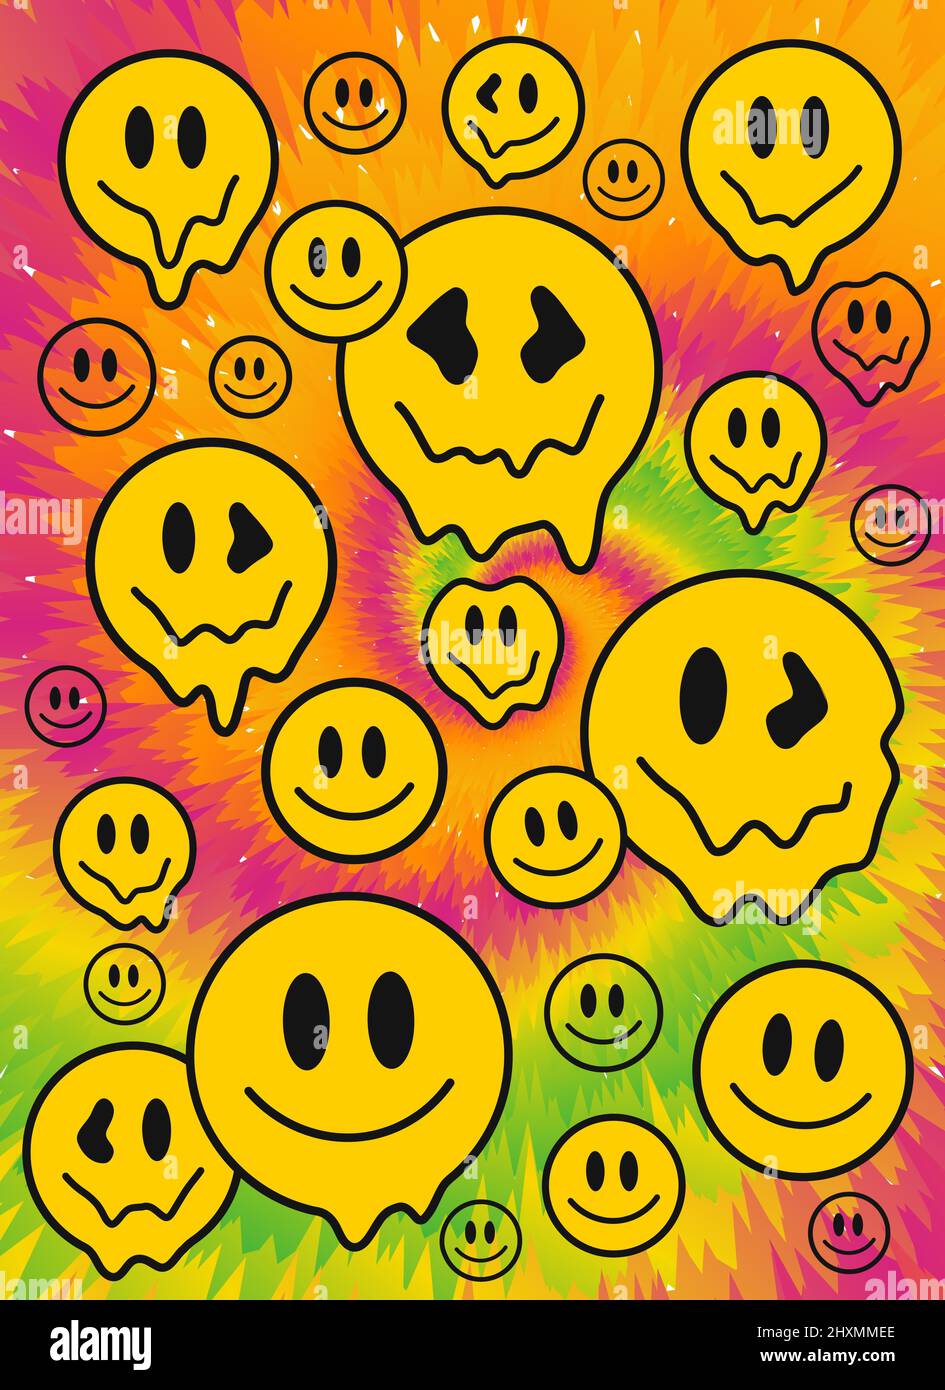 Crazy melt smile faces,tie dye vertical background.Vector tie dye crazy cartoon character illustration.Smile hippie faces,60s melting acid,trippy,tiedye backgroun,pattern,wallpaper print concept Stock Vector